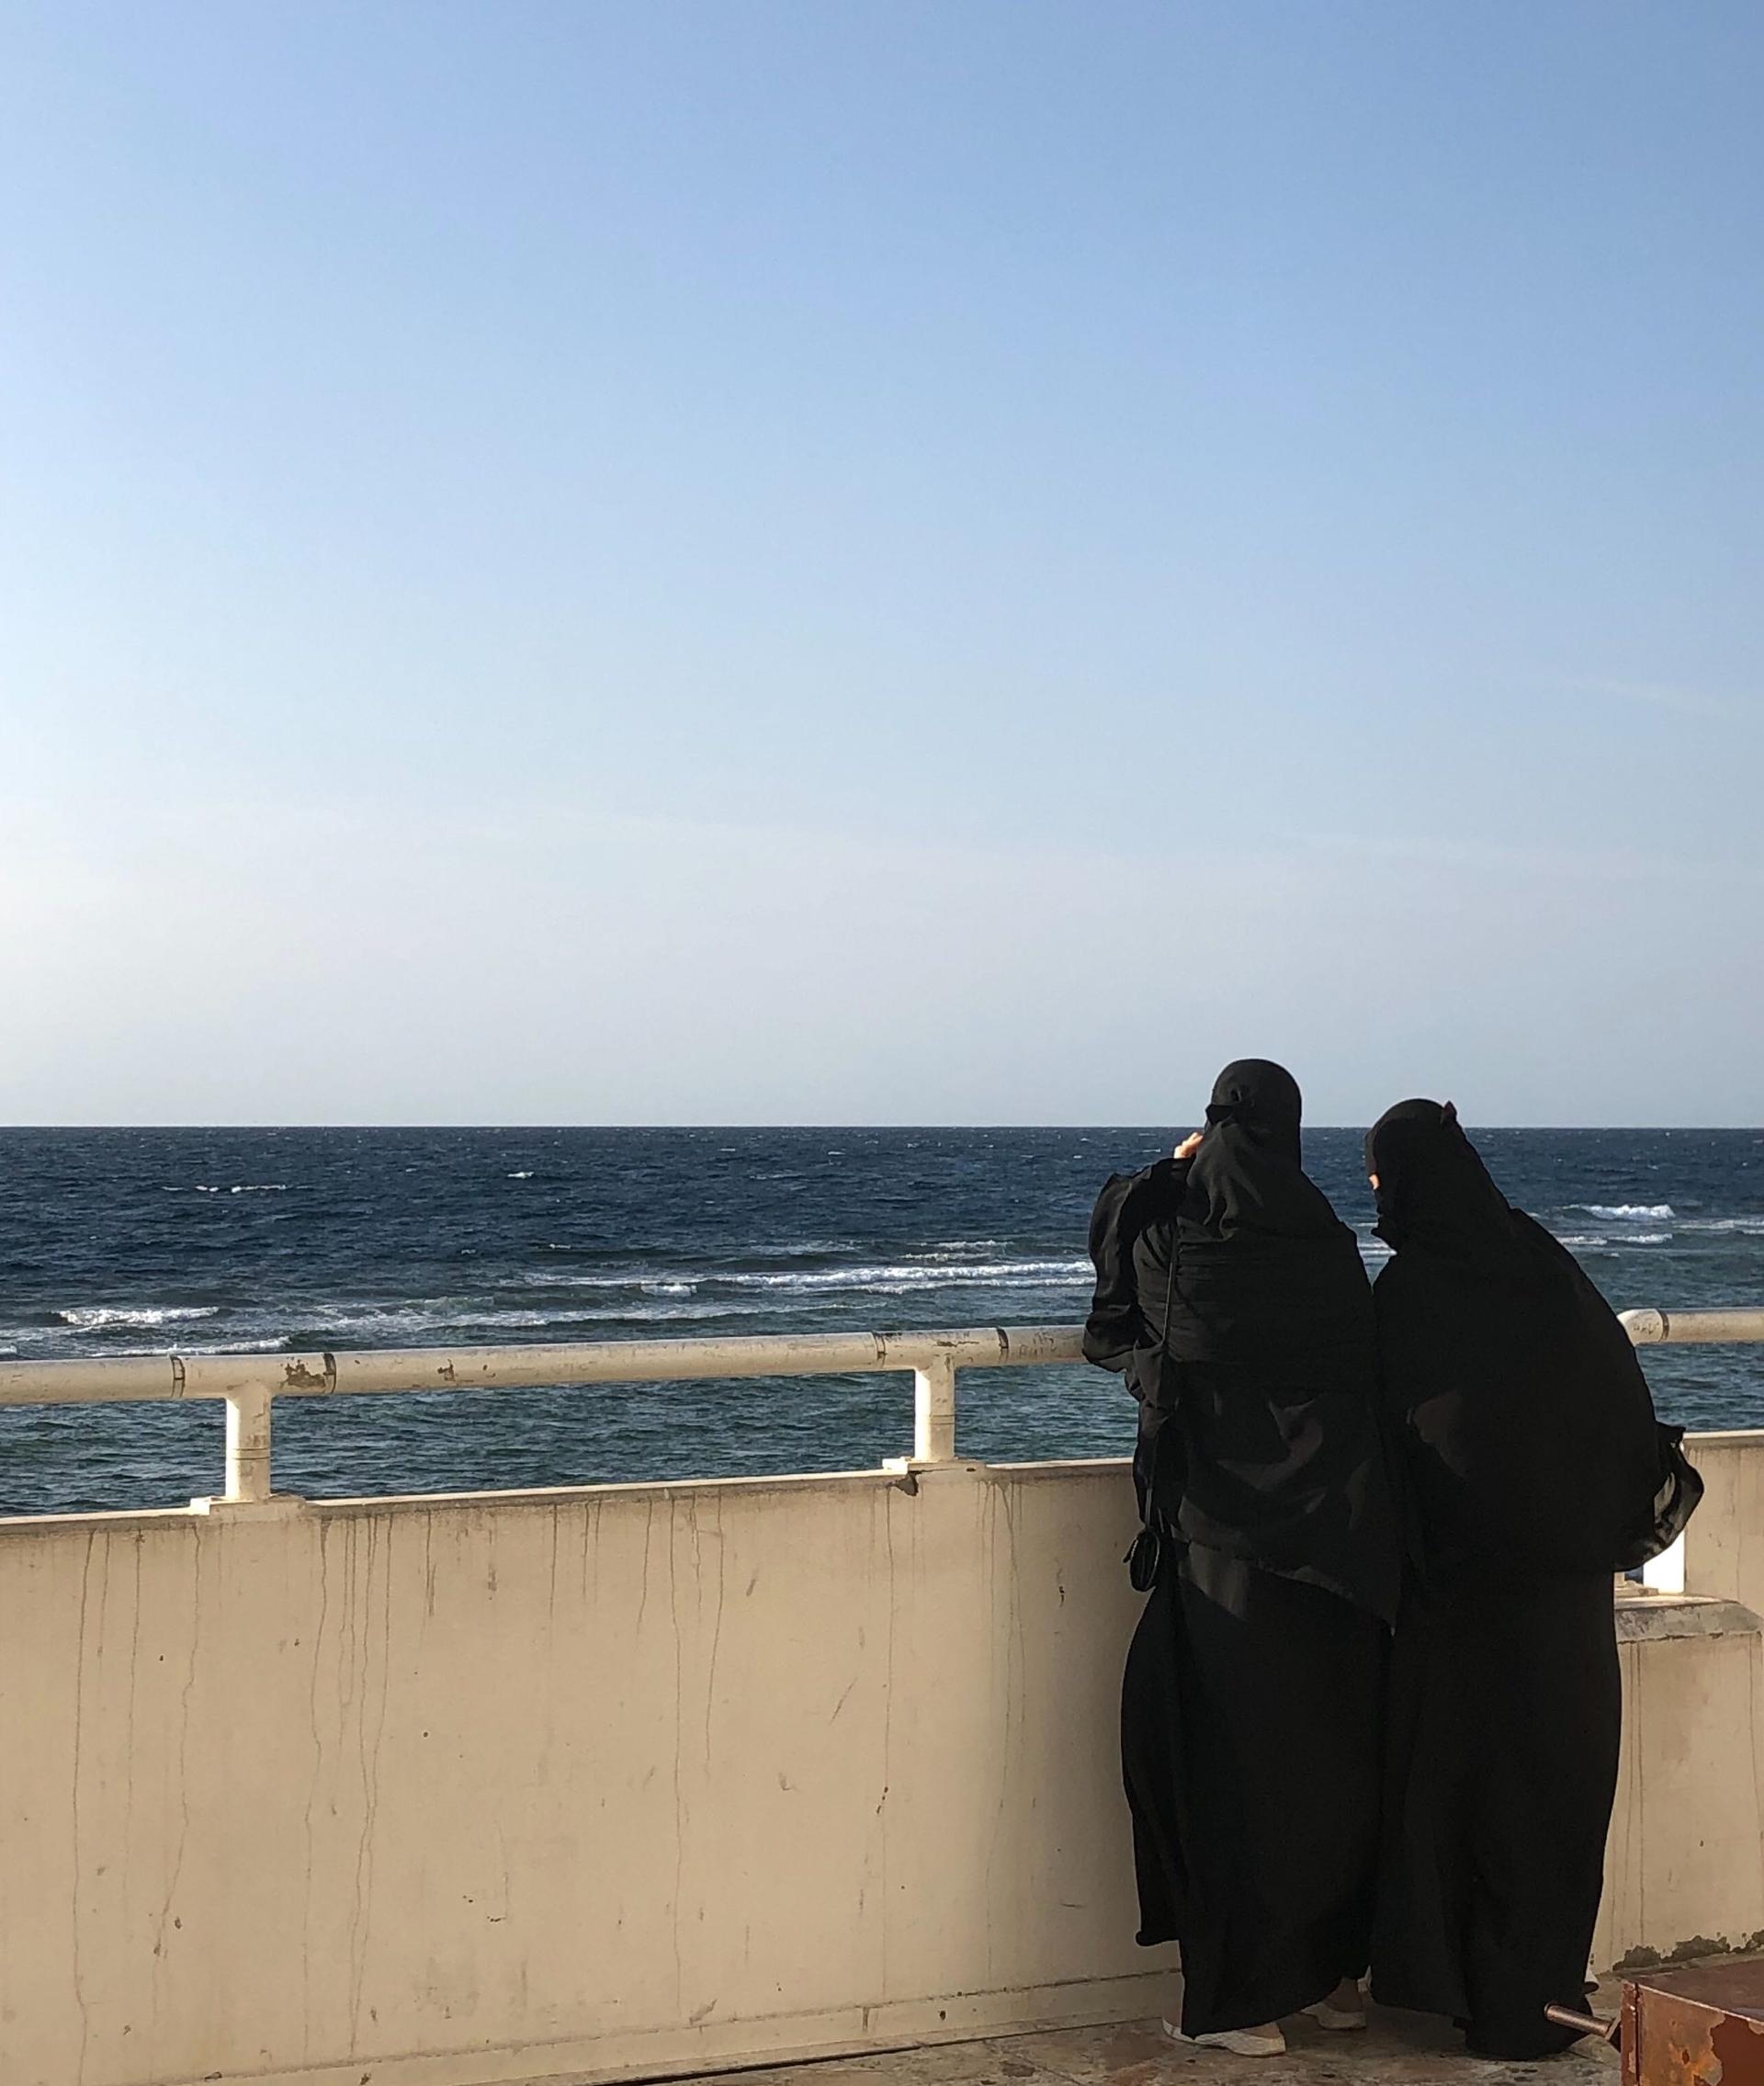 Women at the Corniche in Jeddah, Saudi Arabia.